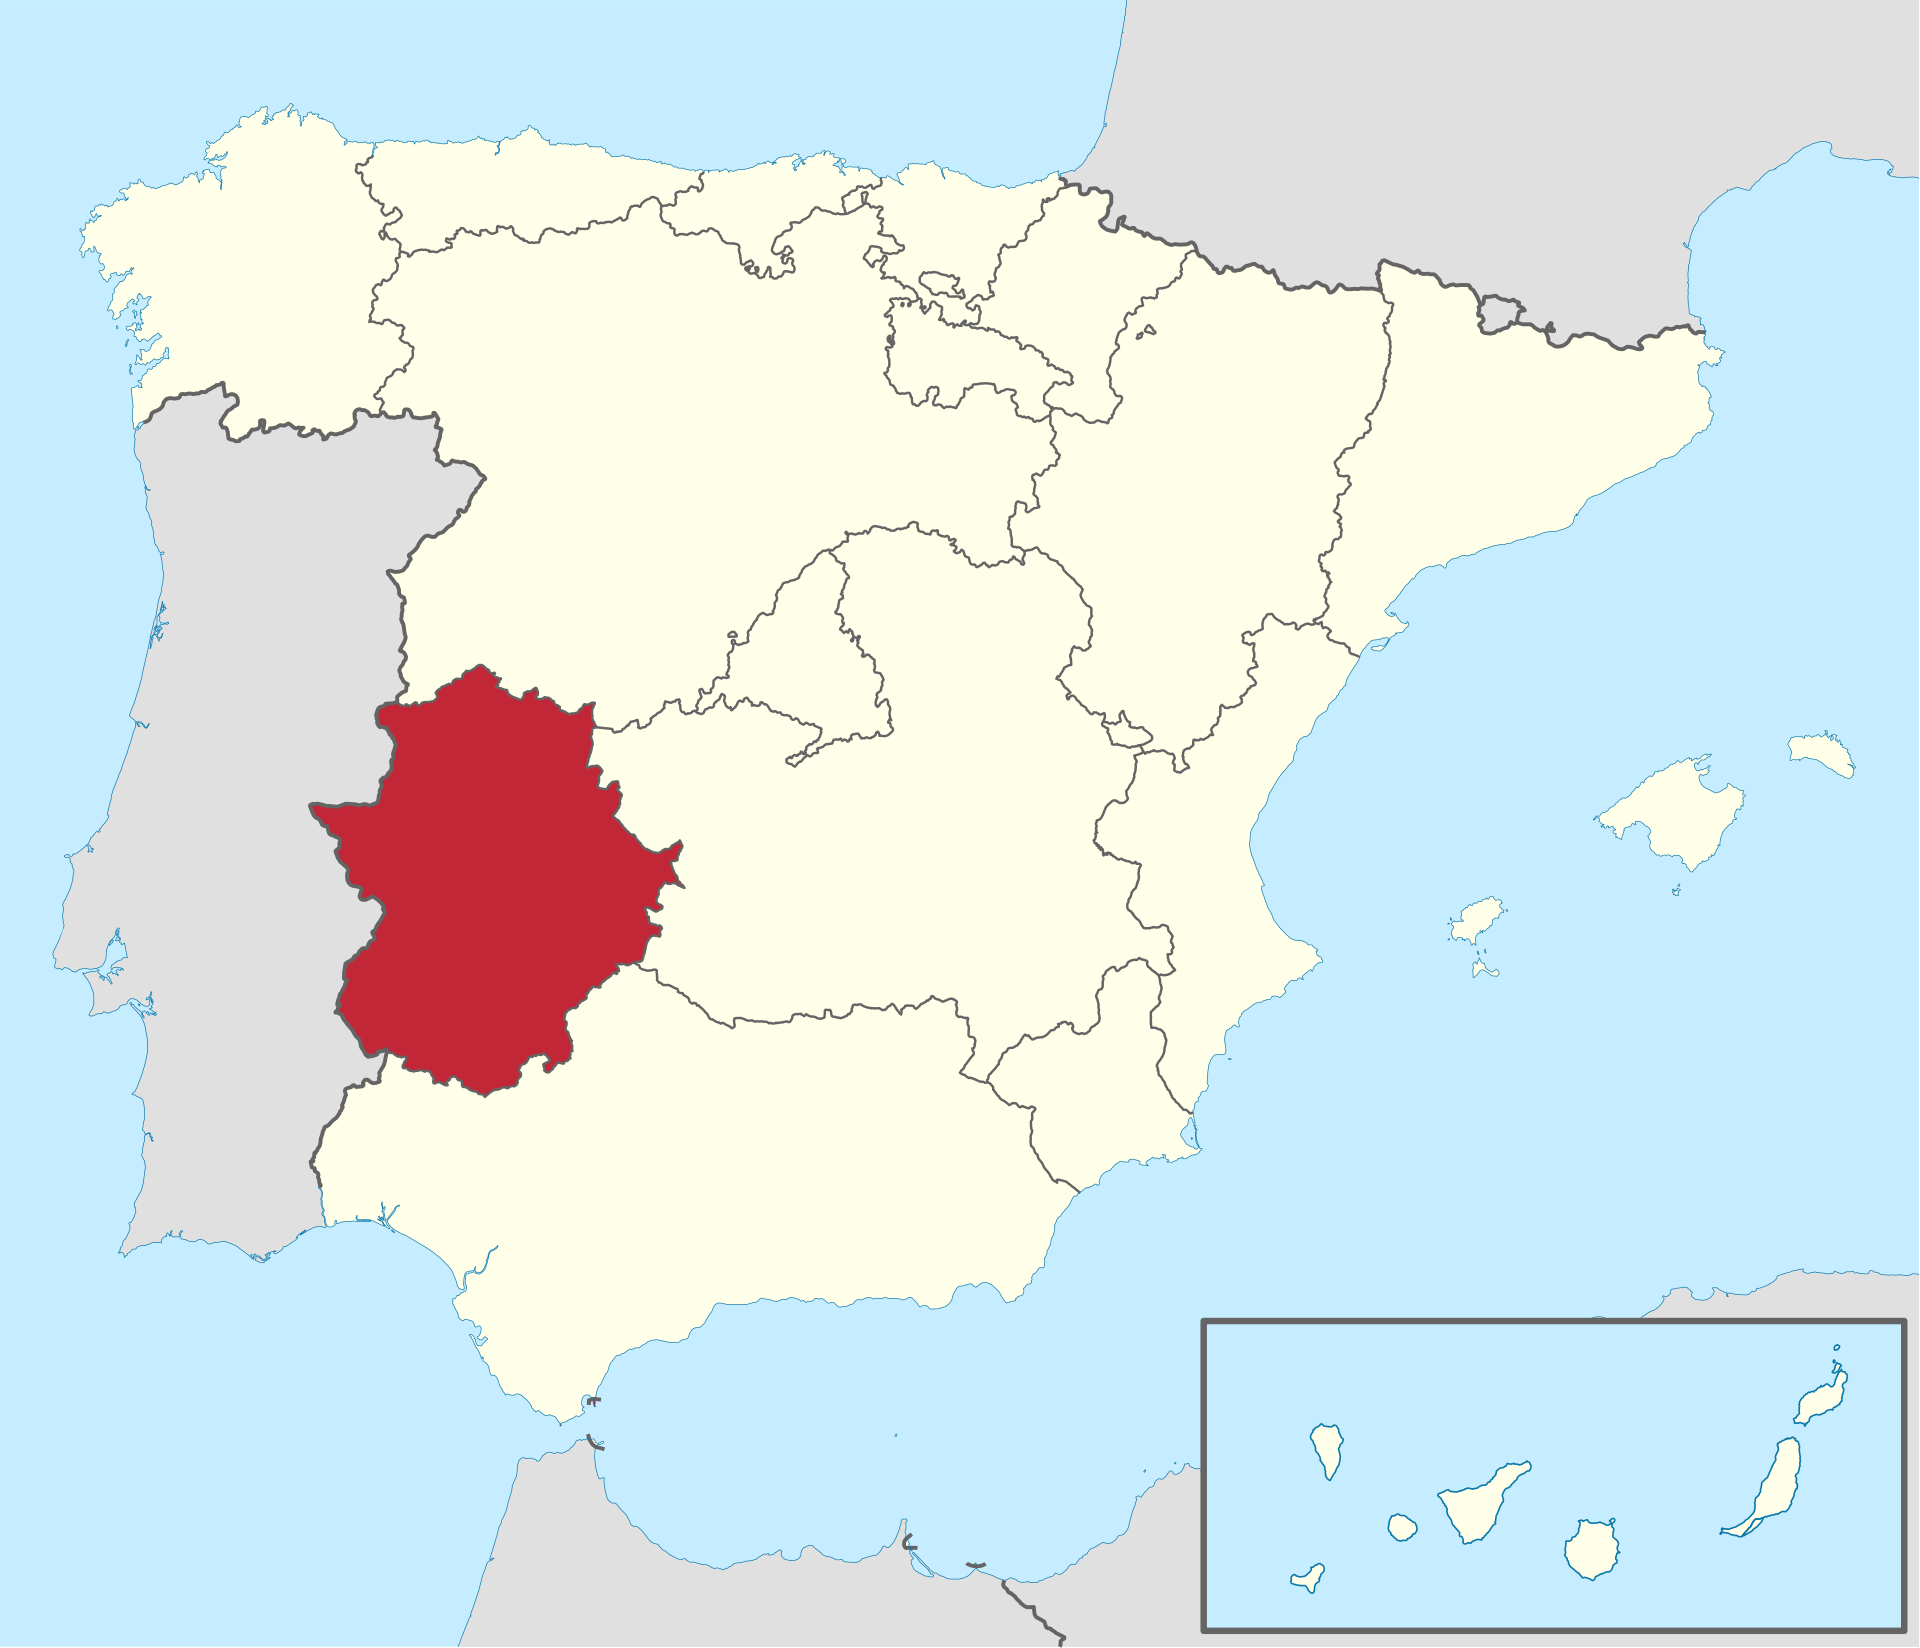 Convent San Miguel Urbex location or around the region Extremadura (Cáceres), Spain